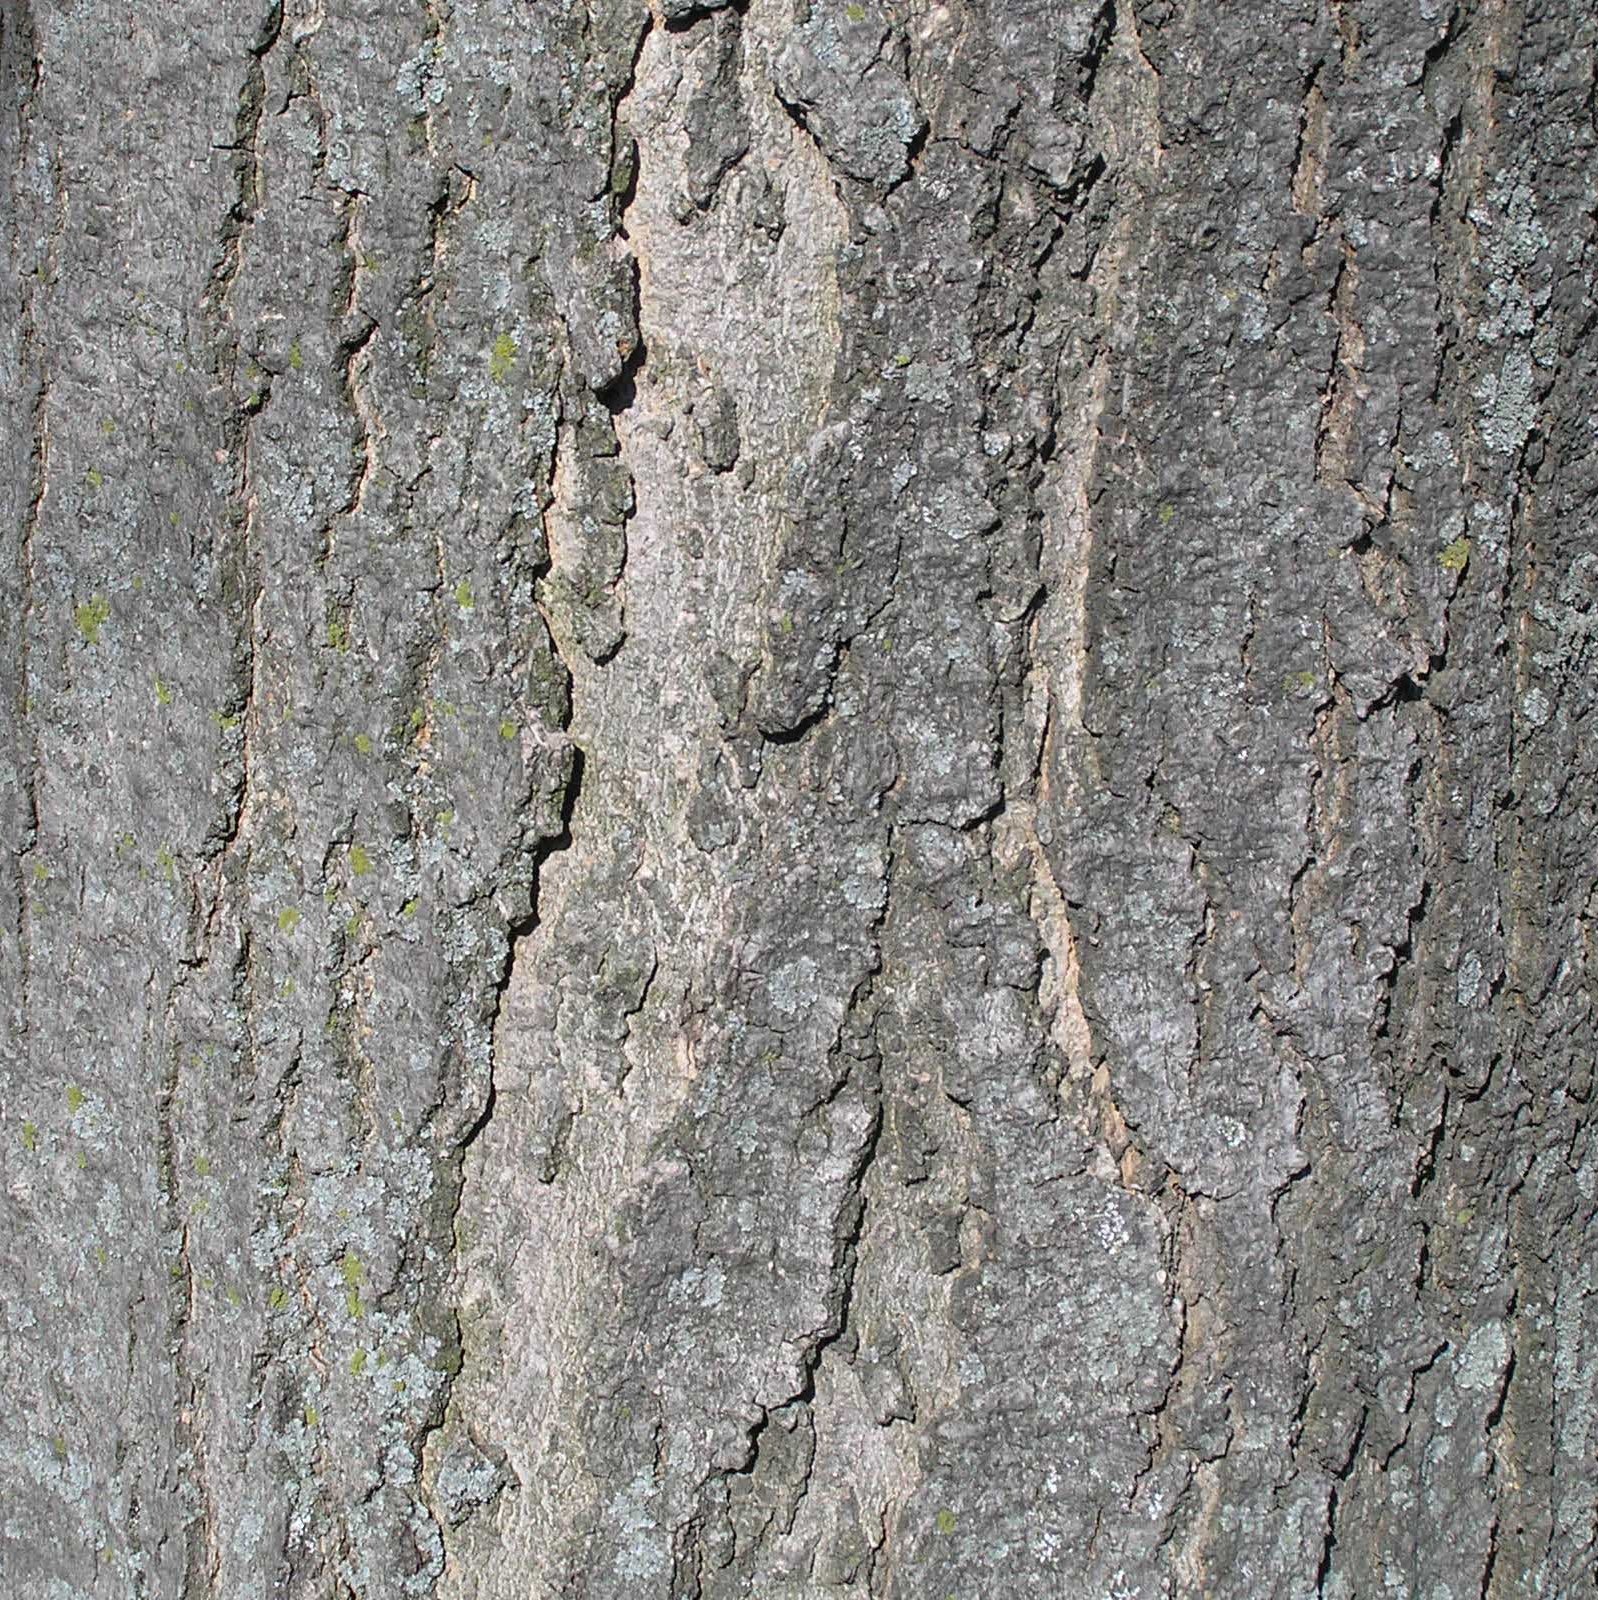 Red Maple Tree Bark